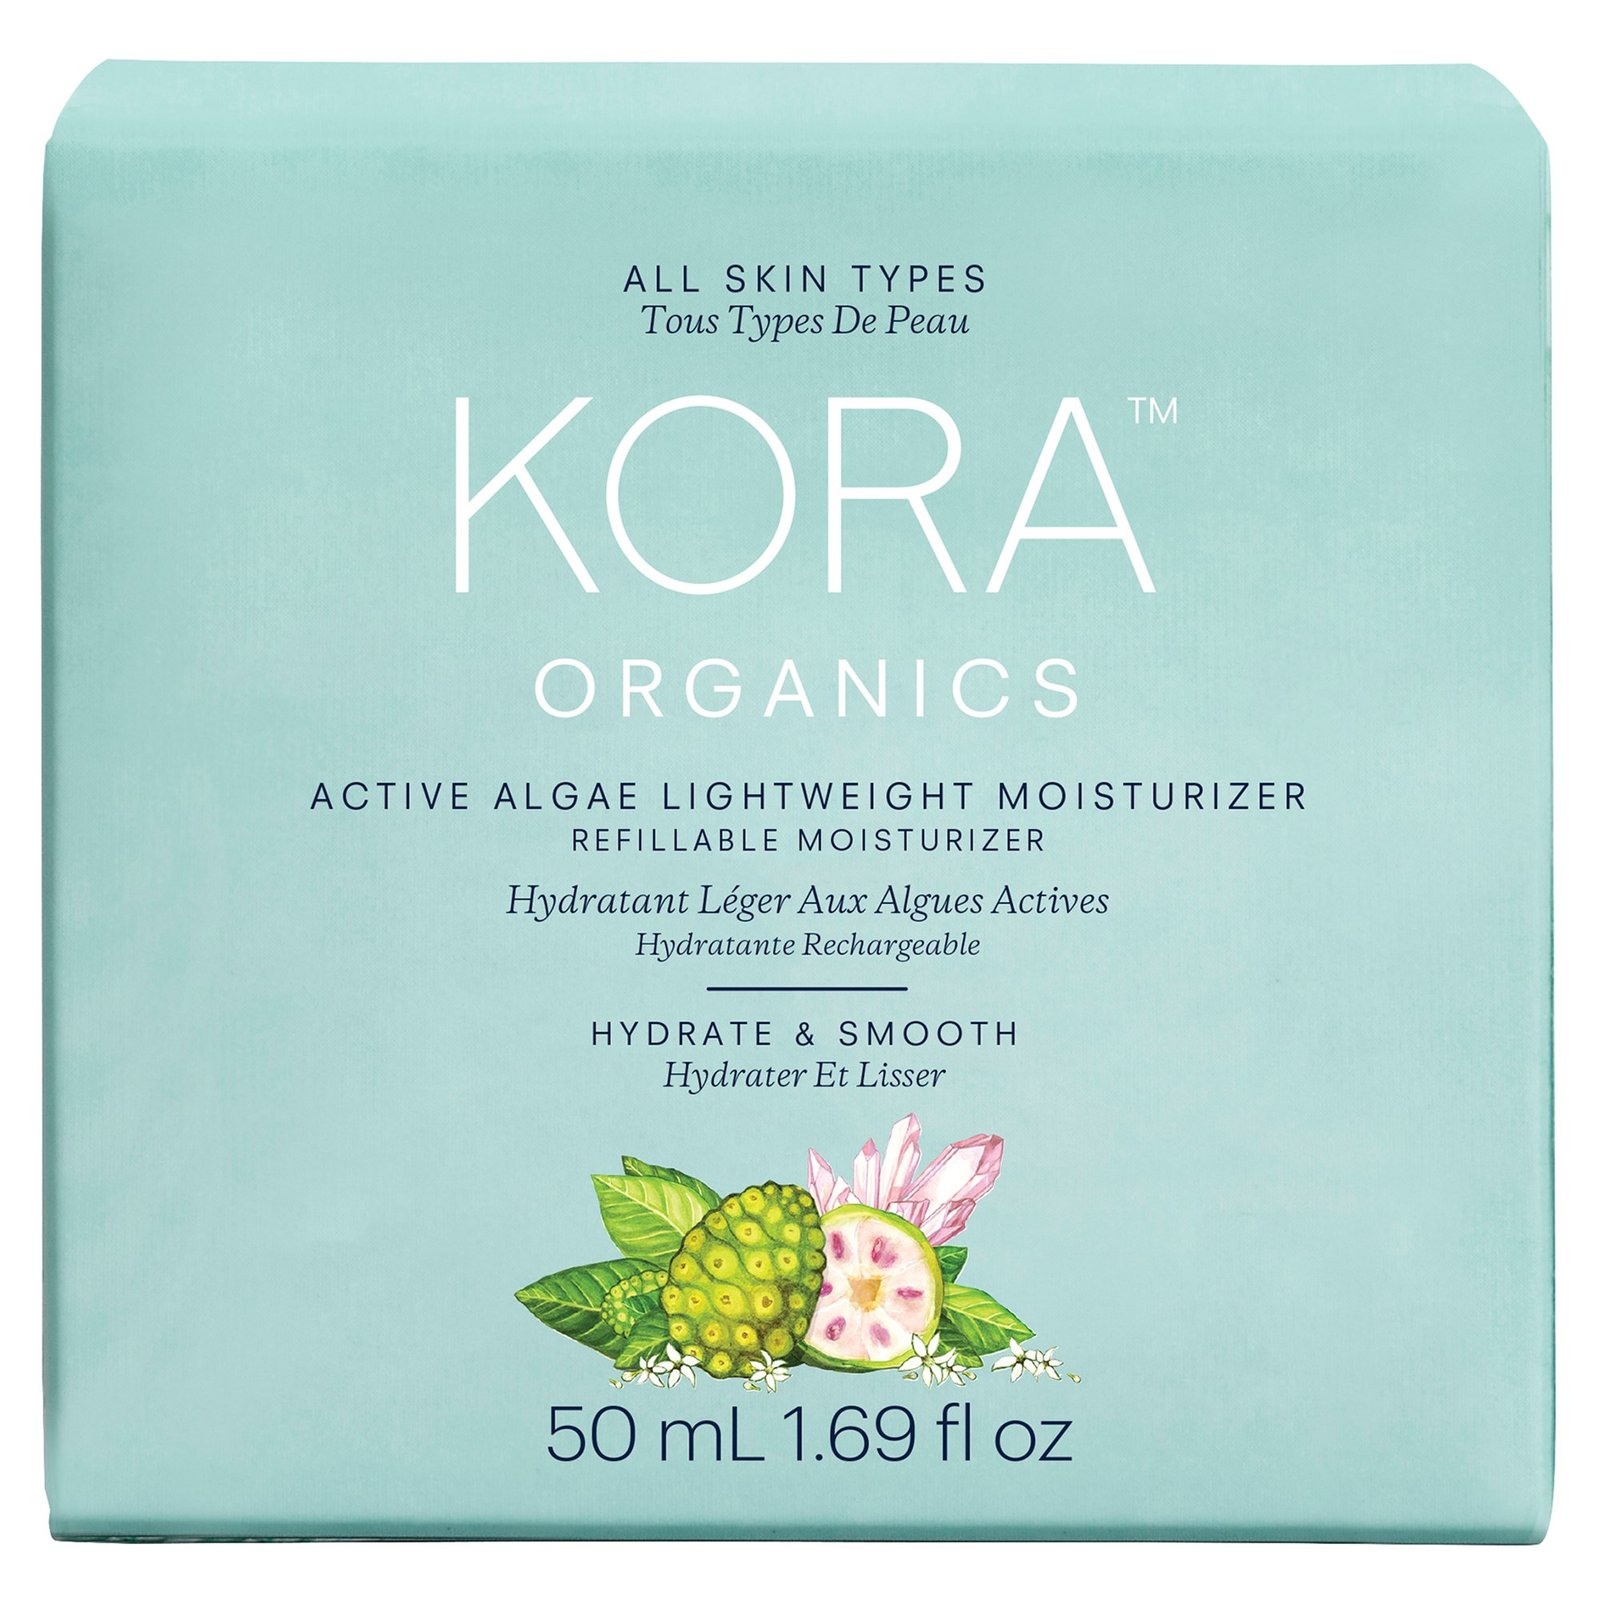 KORA ORGANICS Active Algae Lightweight Moisturizer 50 ml